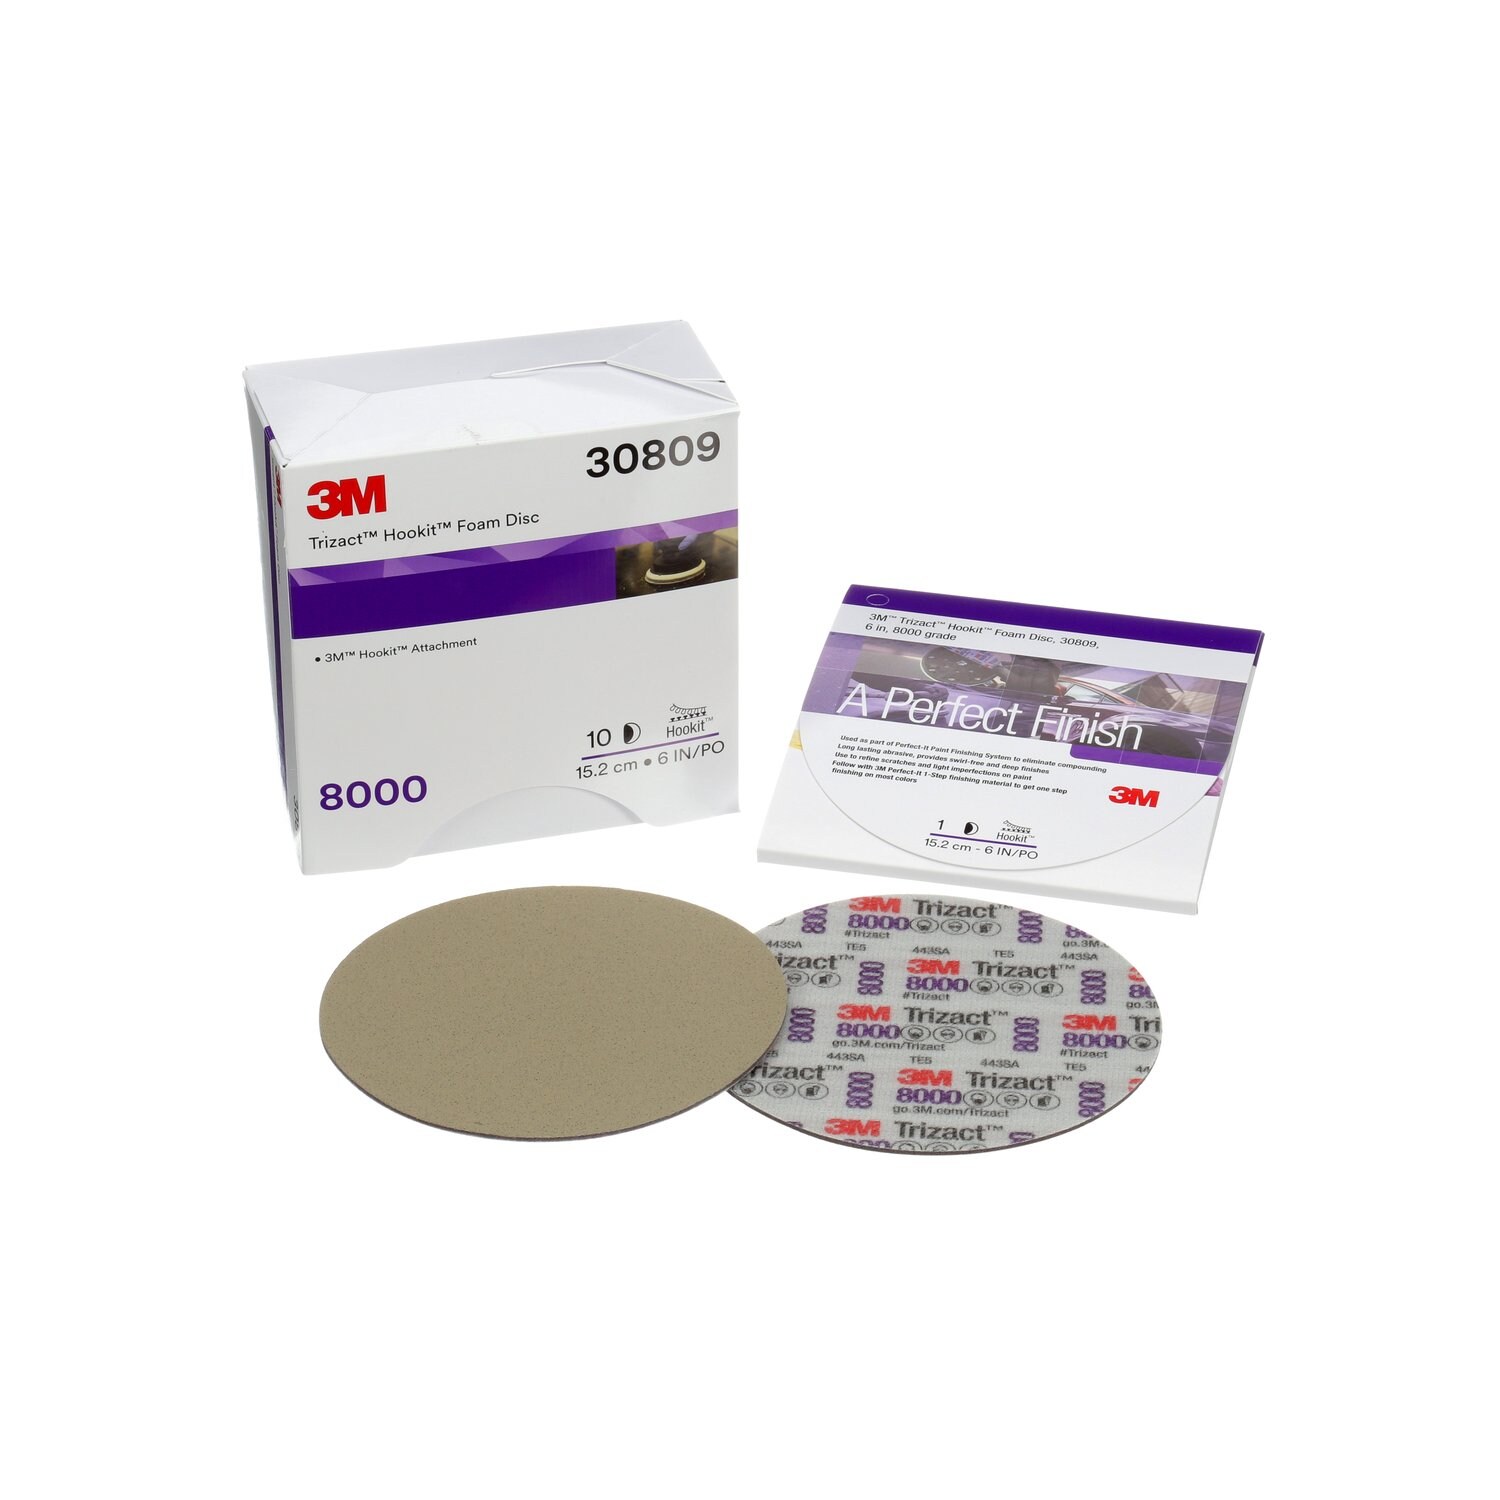 7100190983 - 3M Trizact Hookit Foam Disc, 30809, 6 in, 8000, 10 discs per carton,
4 cartons per case